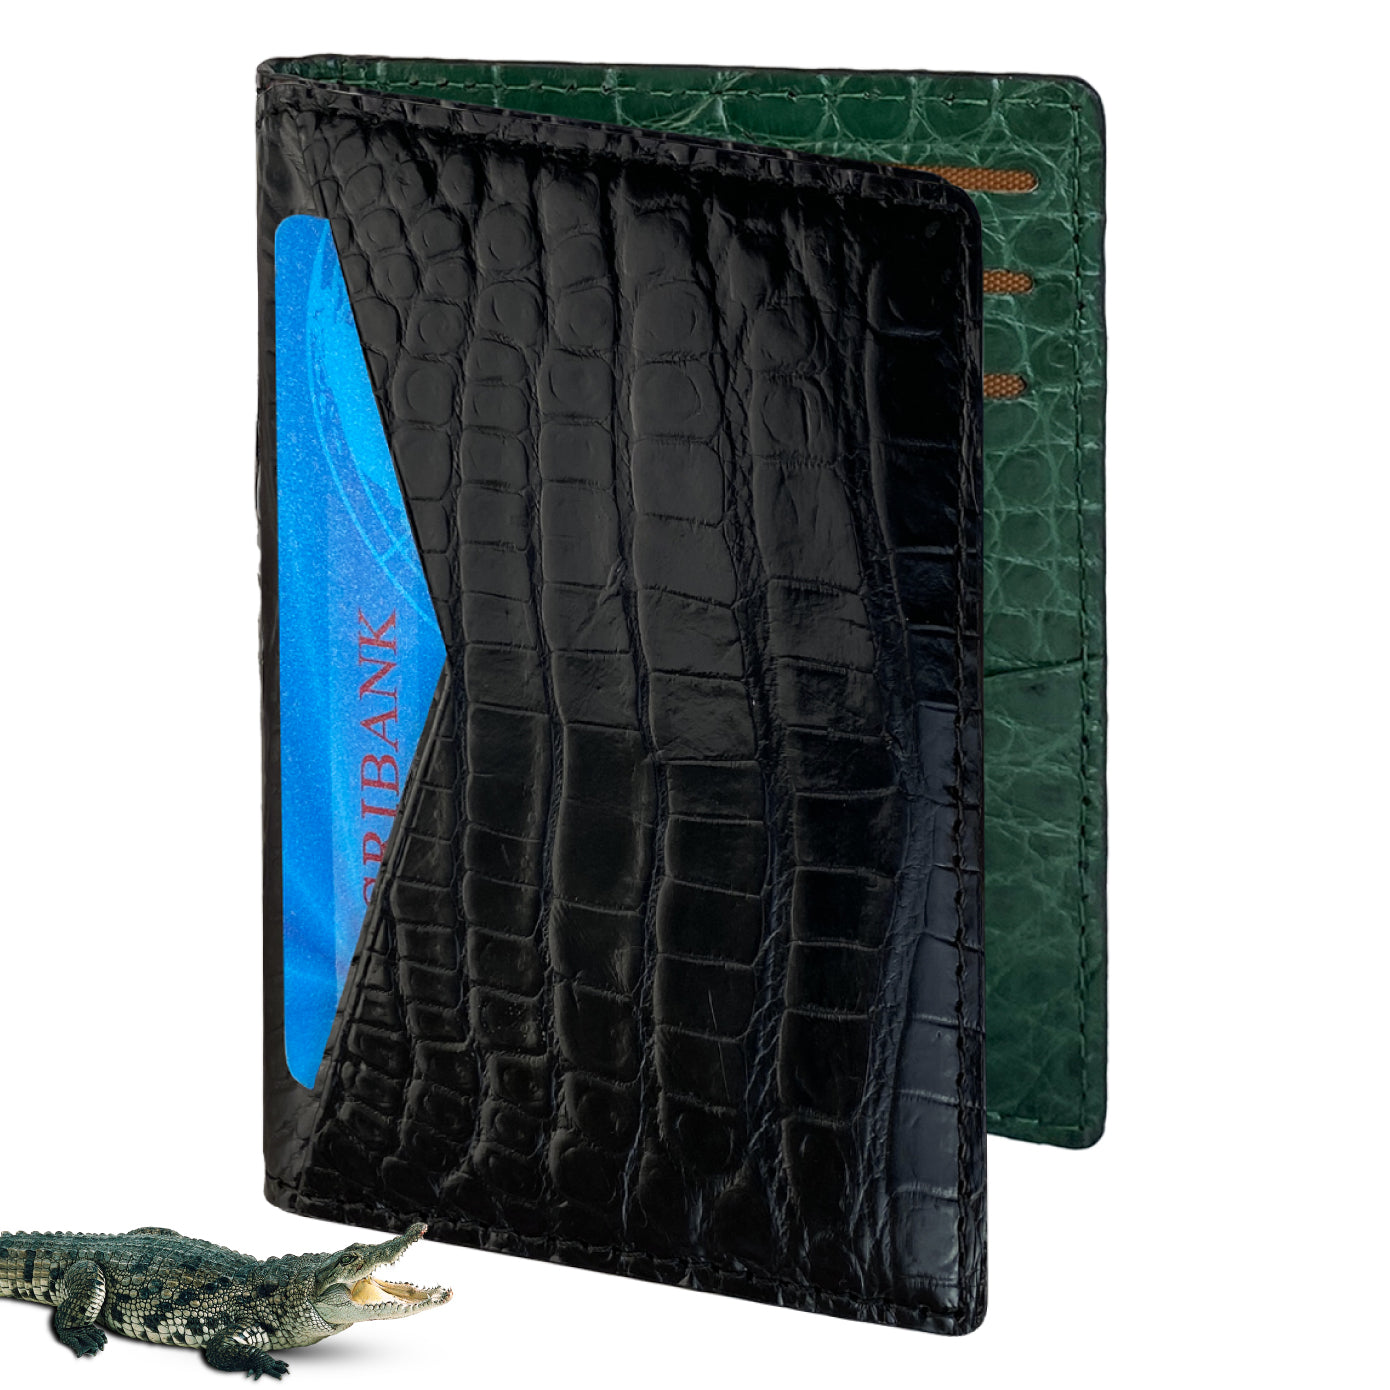 Black & Green Double Side Alligator Leather Credit Card Holder | RFID Blocking | CARD-11